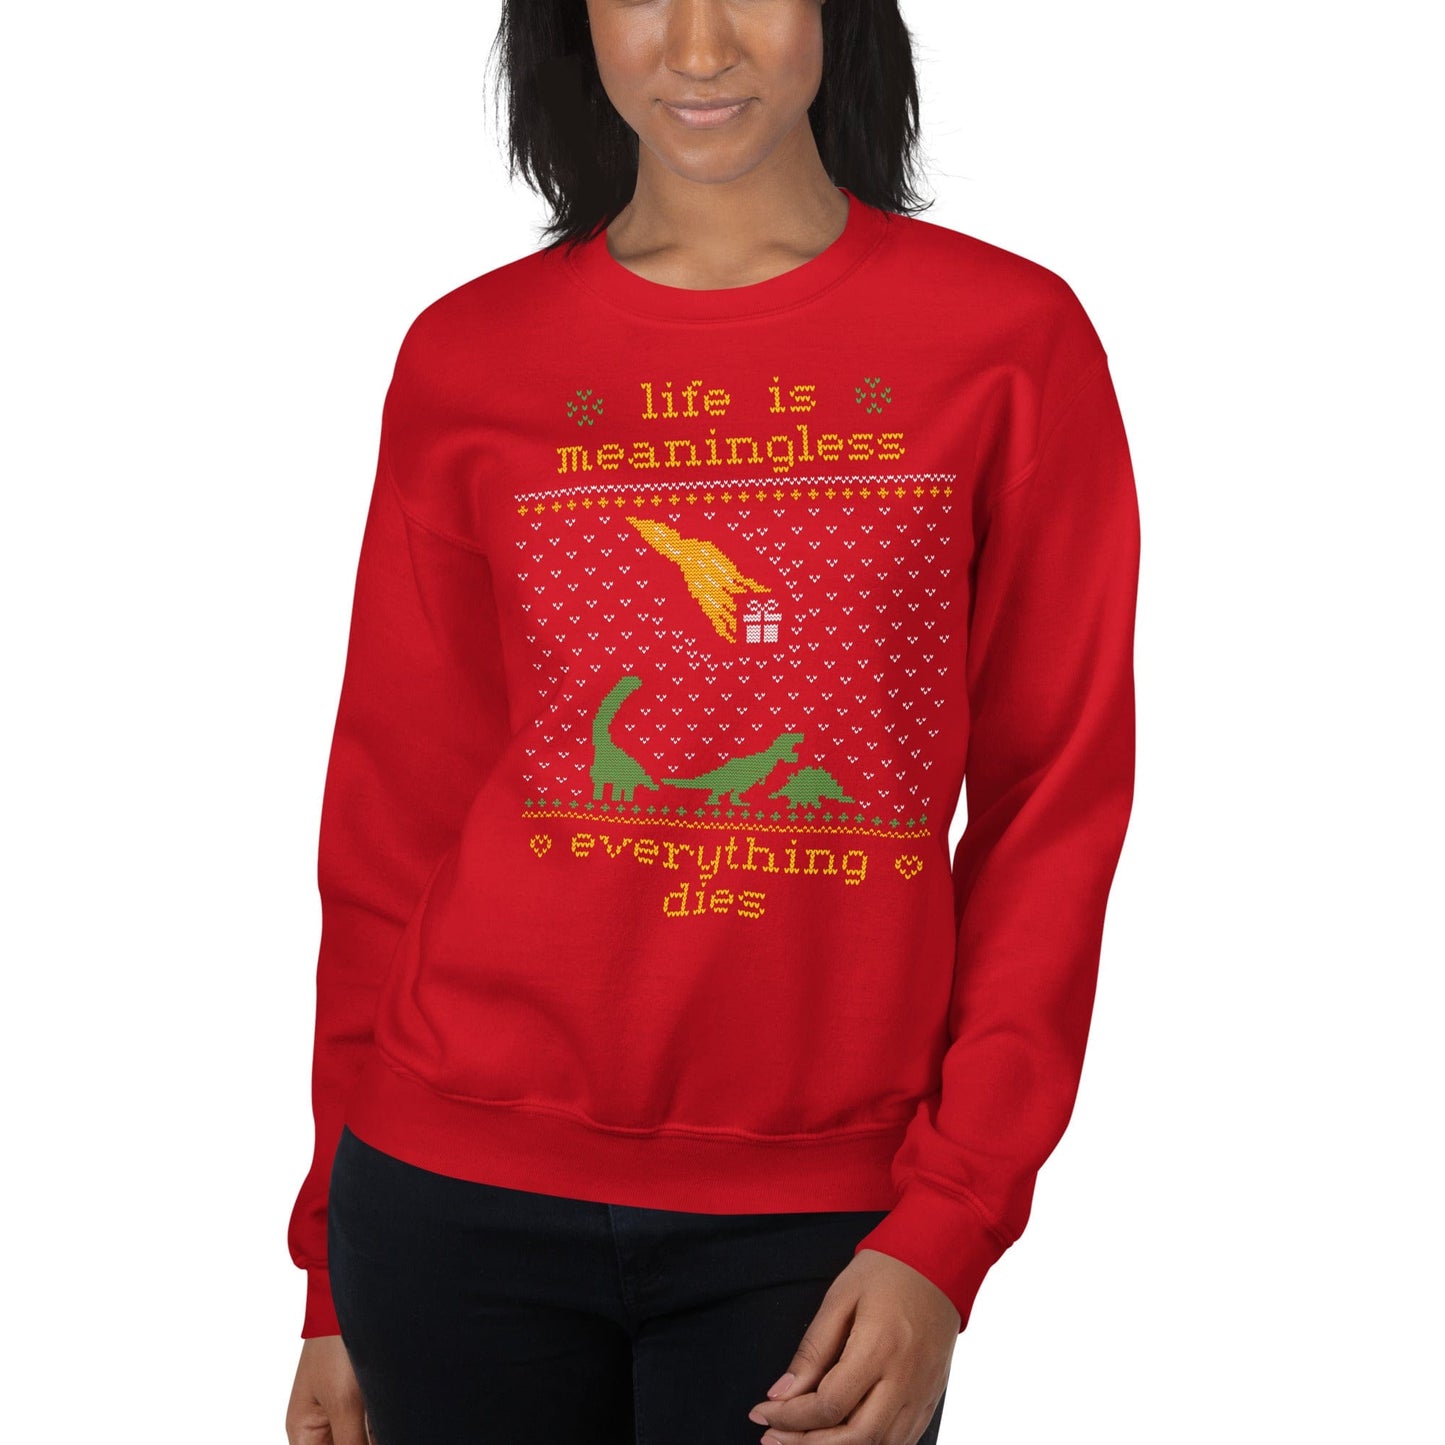 Life is meaningless - Ugly Xmas Sweater - Sweatshirt